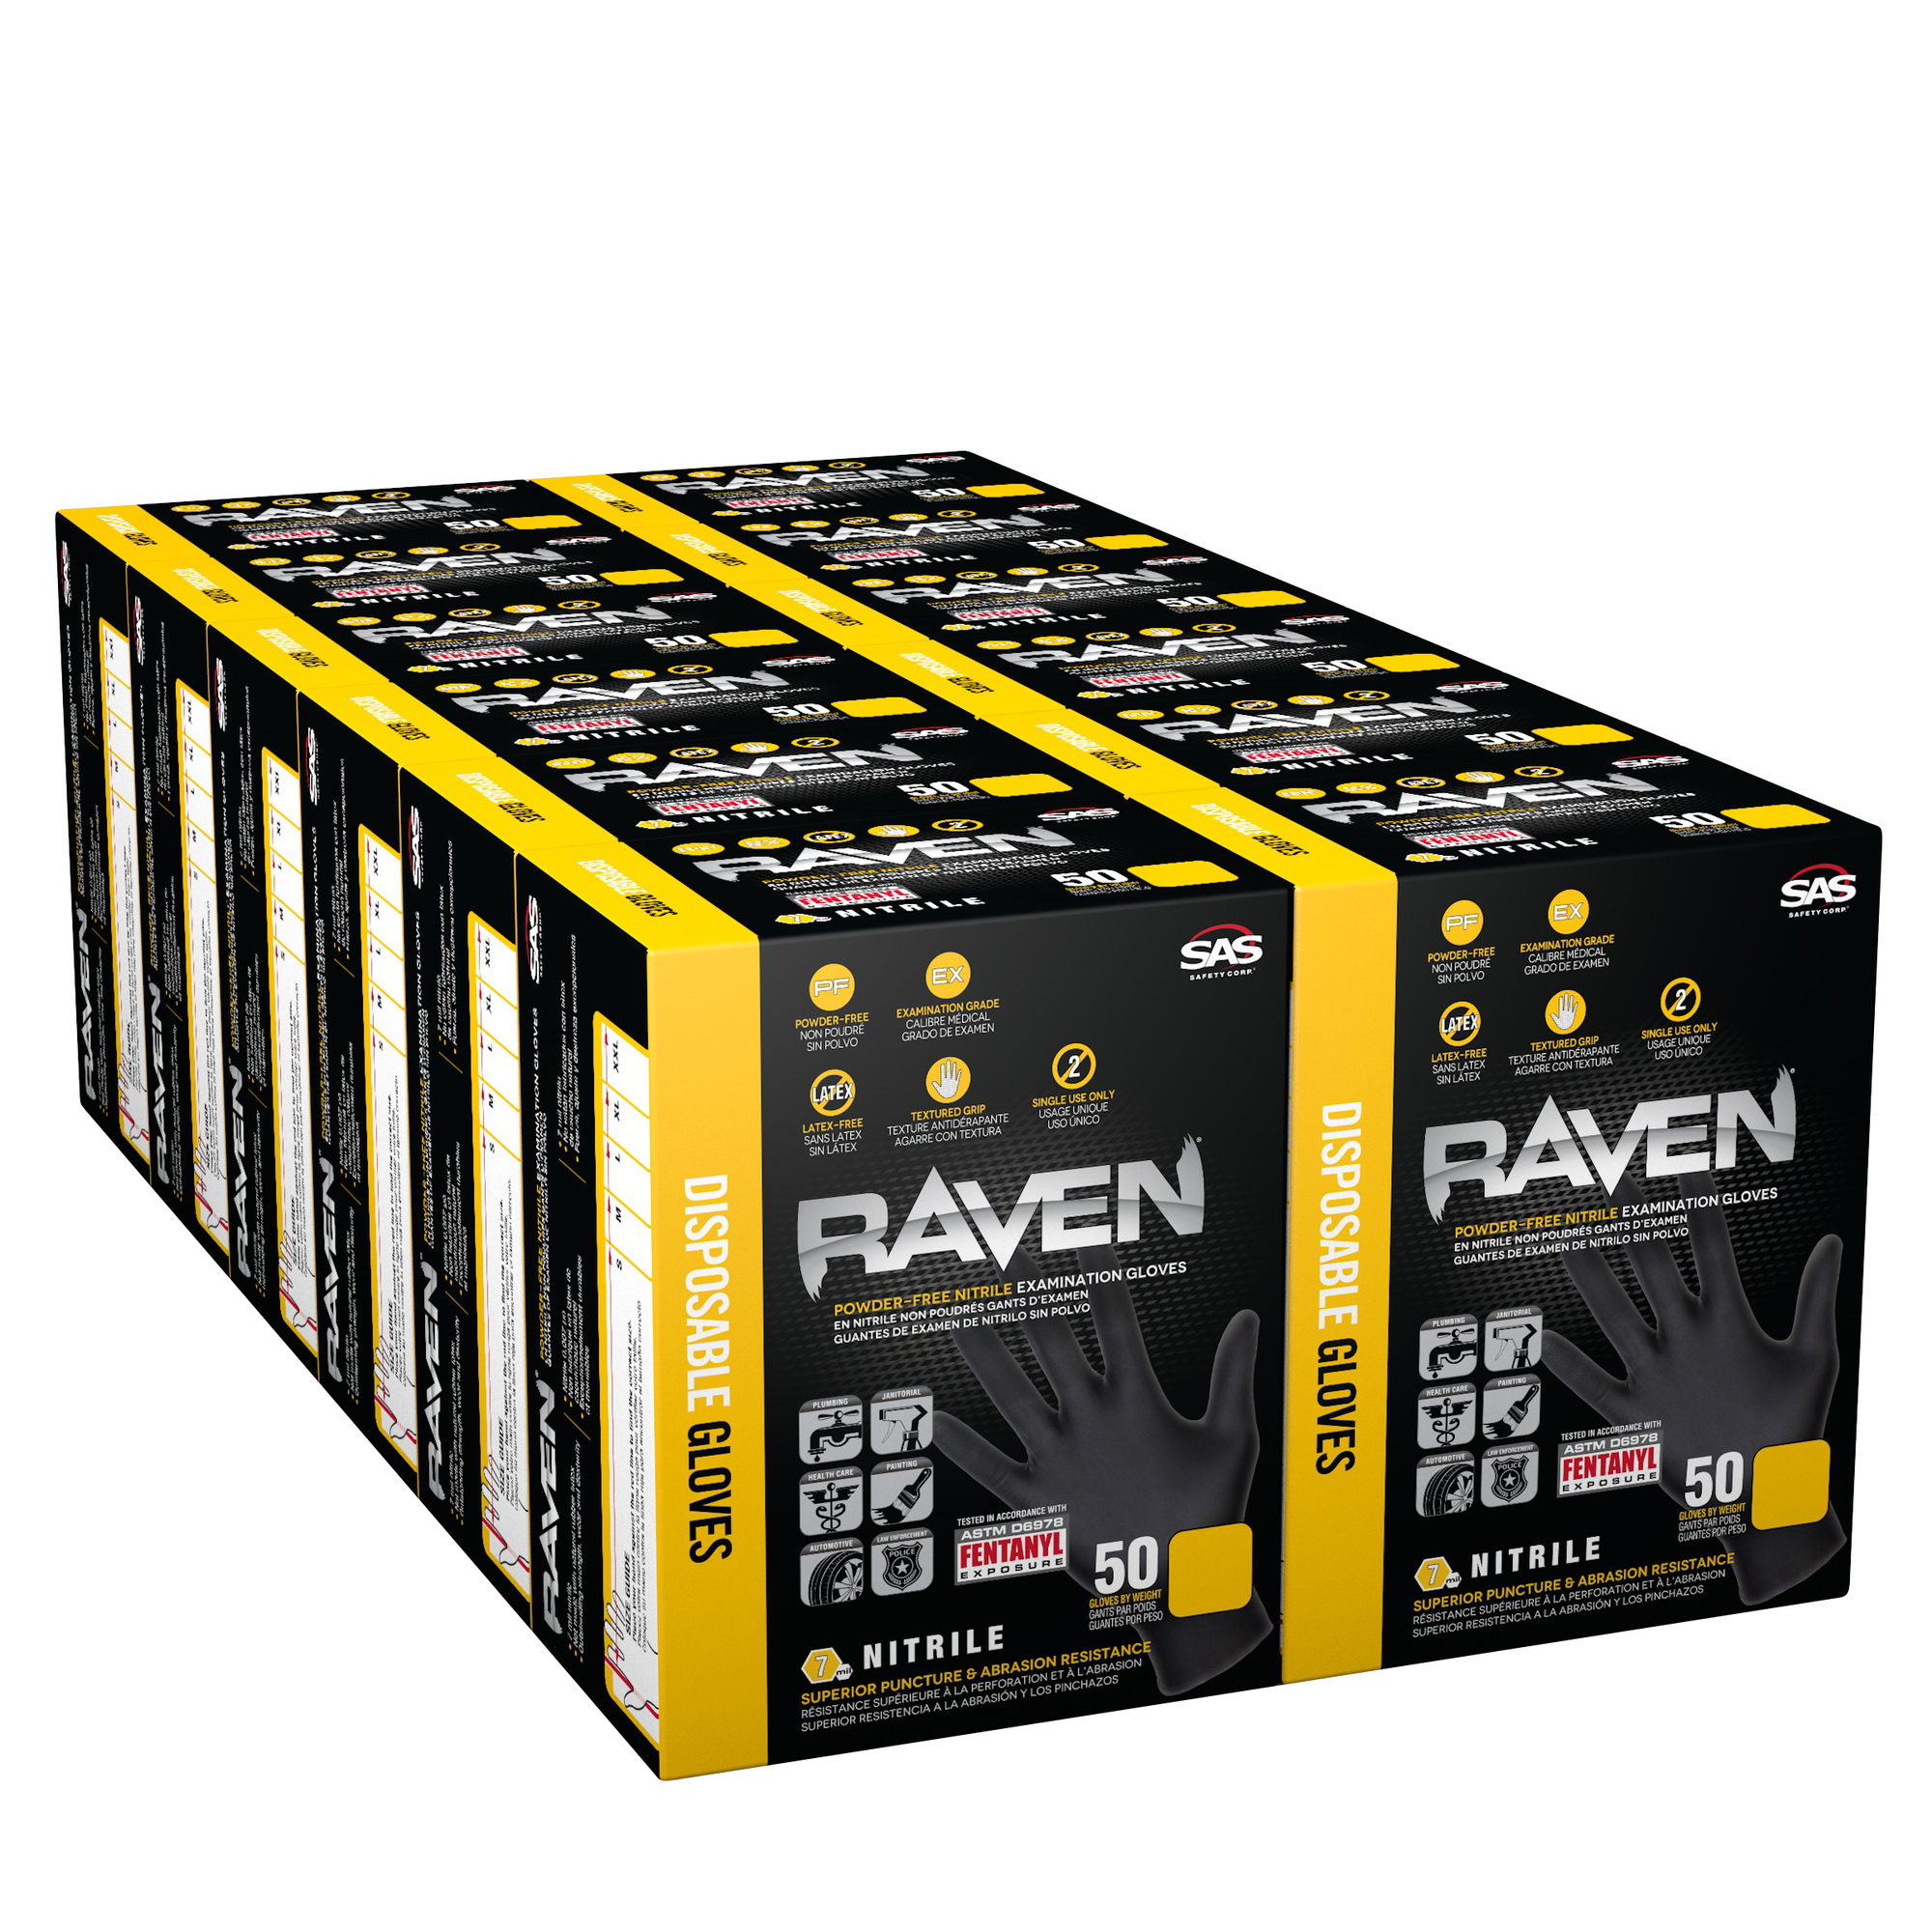 Raven, Case Raven Gloves 50 Packs 7Mil PF Exam Textured, Size M, Color Black, Included (qty.) 600 Model 66517-01CASE